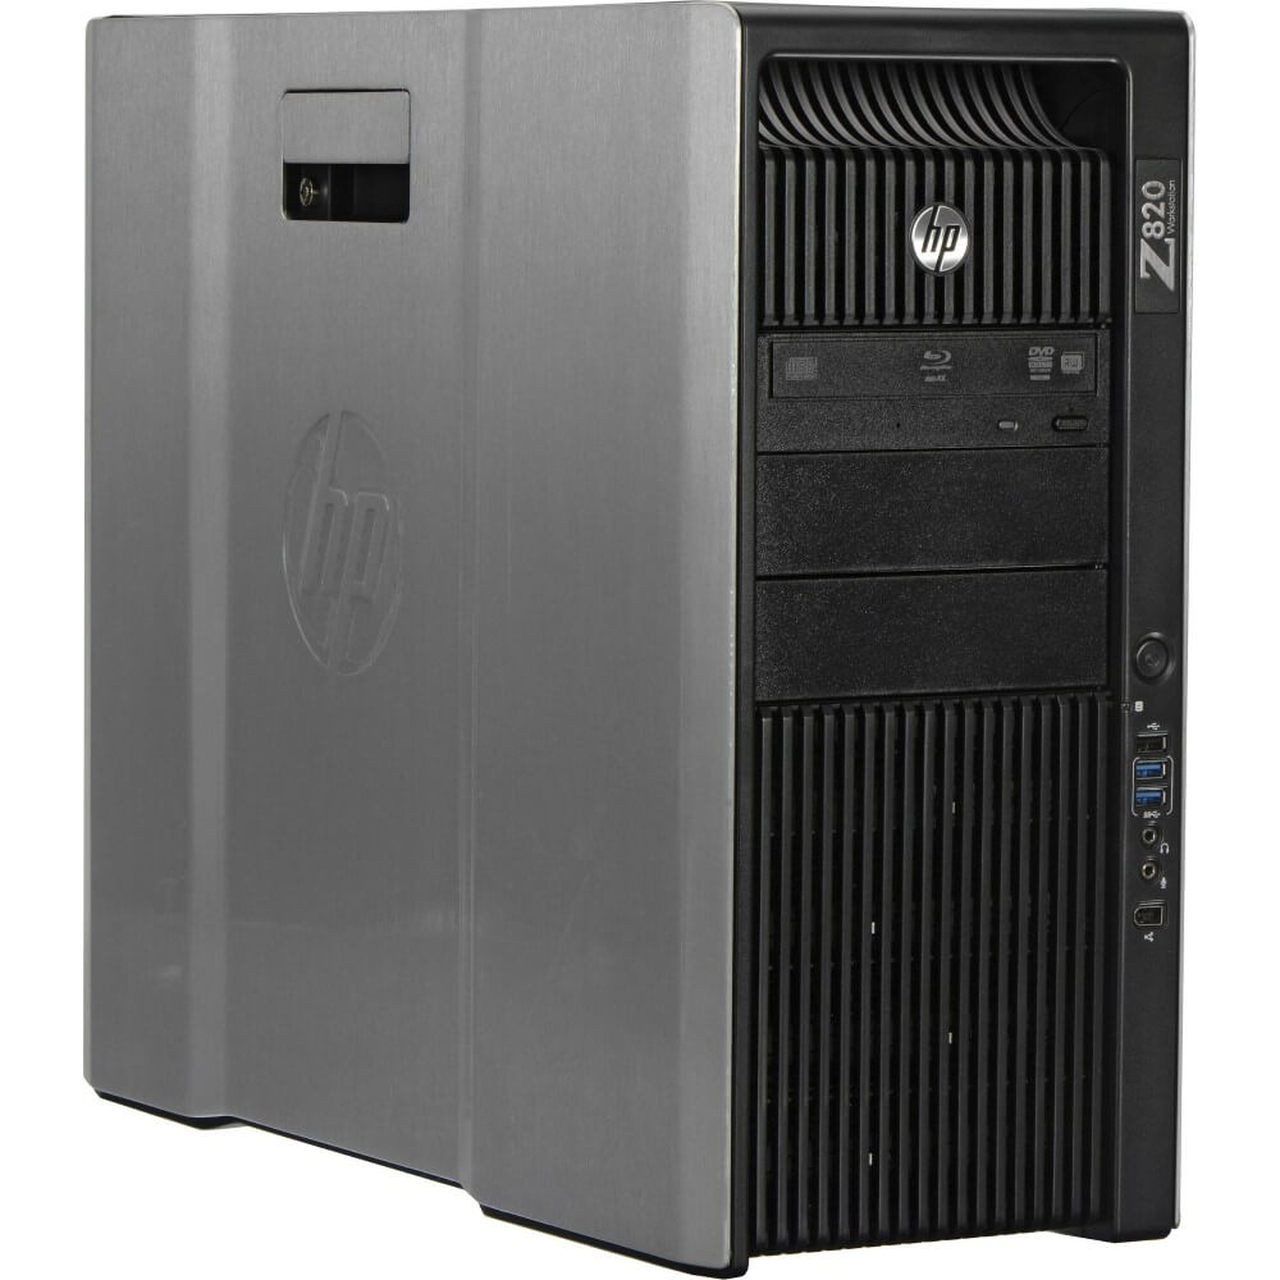 HP Workstation Z820 Tower Dual Eight Core Intel Xeon 2.60GHz, 32GB Ram, 500GB SSD, DVD-RW, Windows 10 Pro 64 Desktop Computer